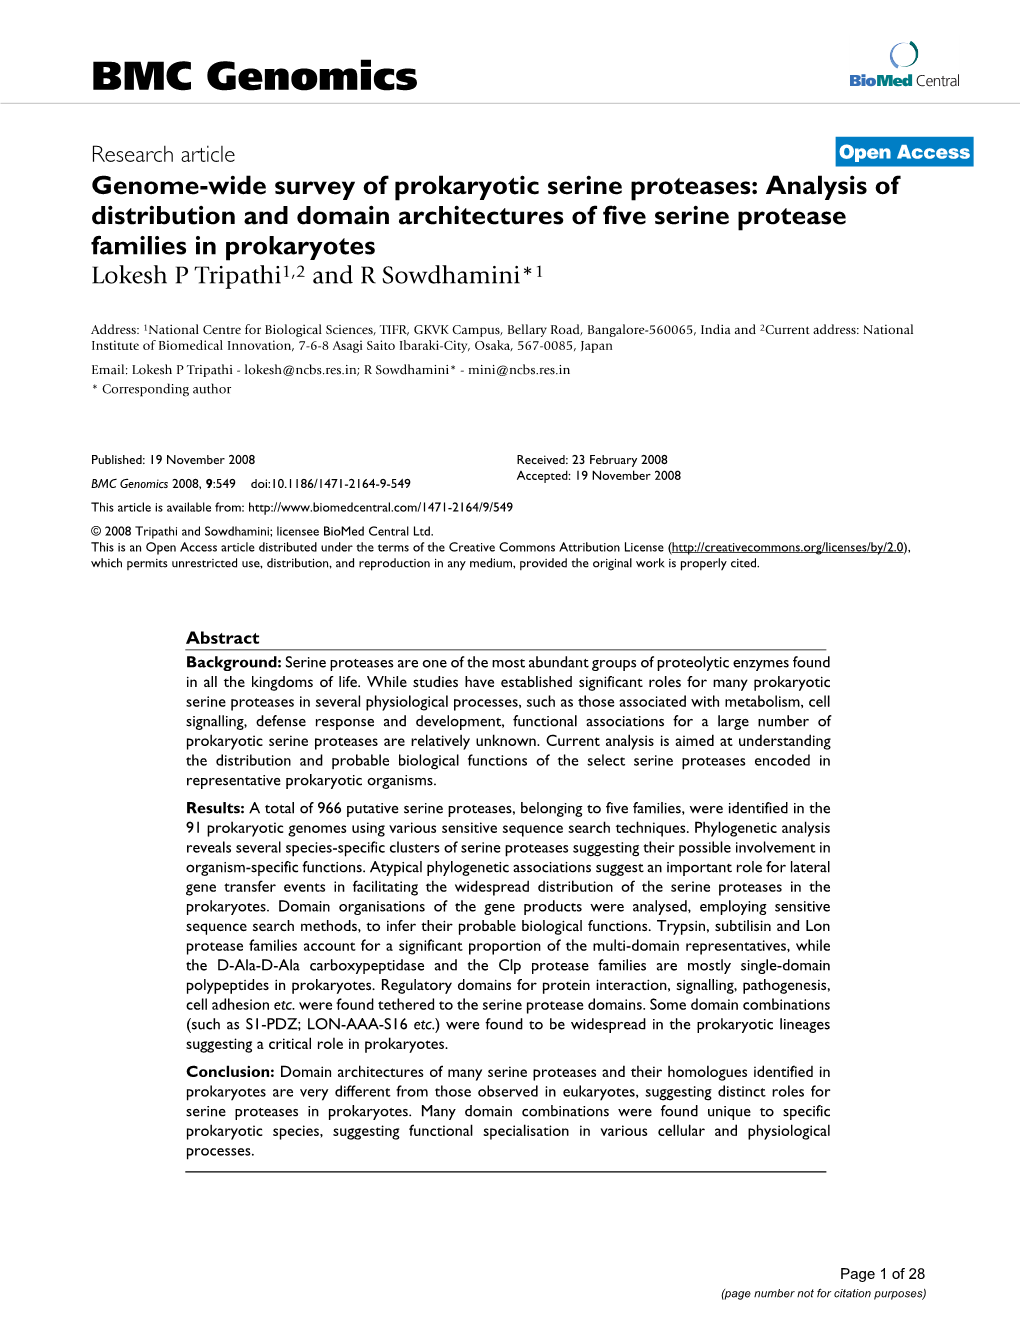 Genome-Wide Survey of Prokaryotic Serine Proteases: Analysis Of